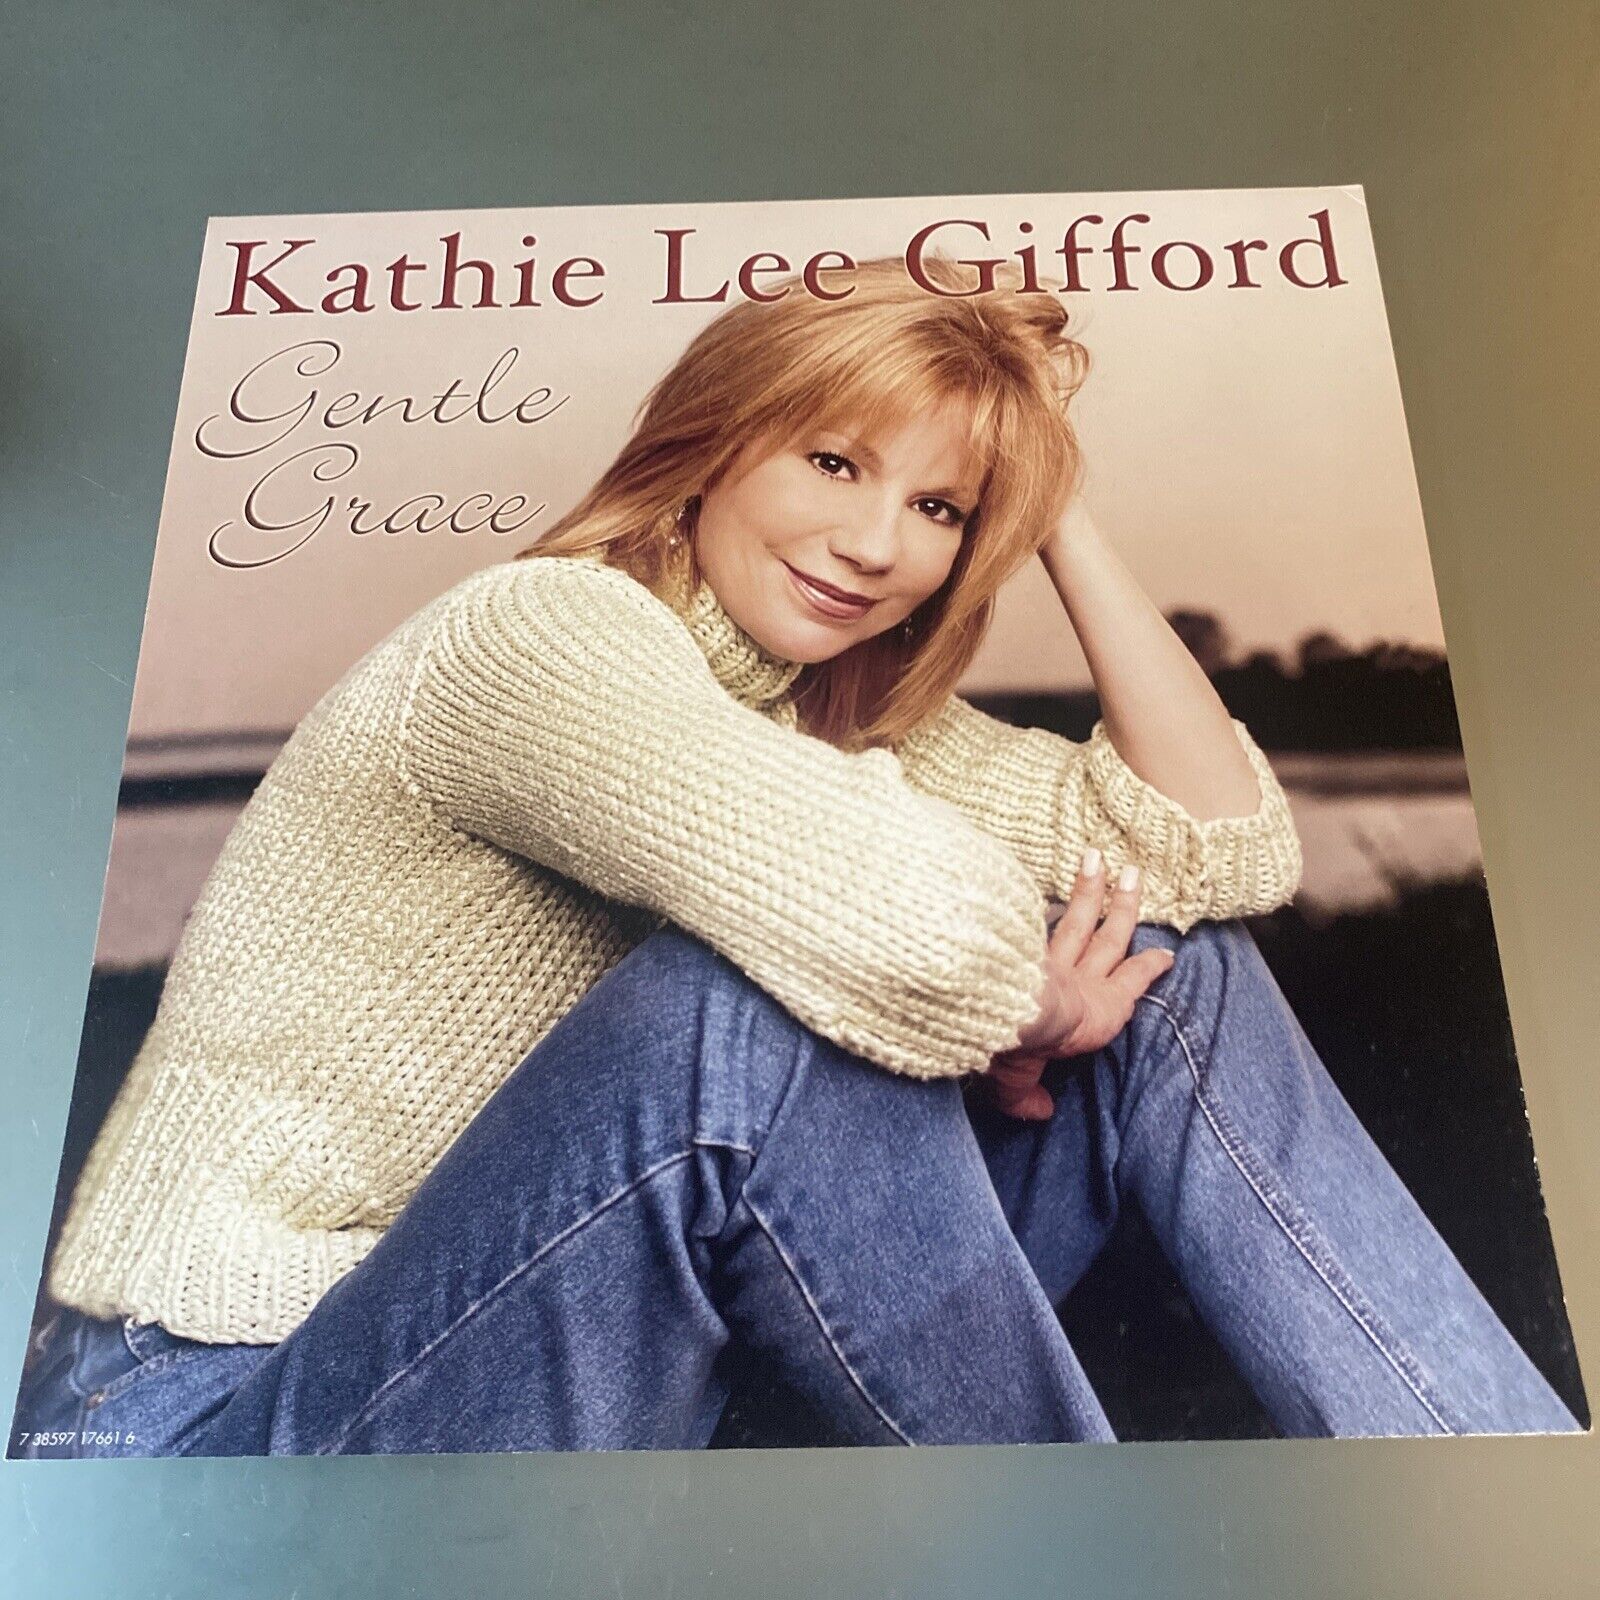 Kathie, Lee Gifford, Gentle Grace 12x12, Album Flat Poster Christian